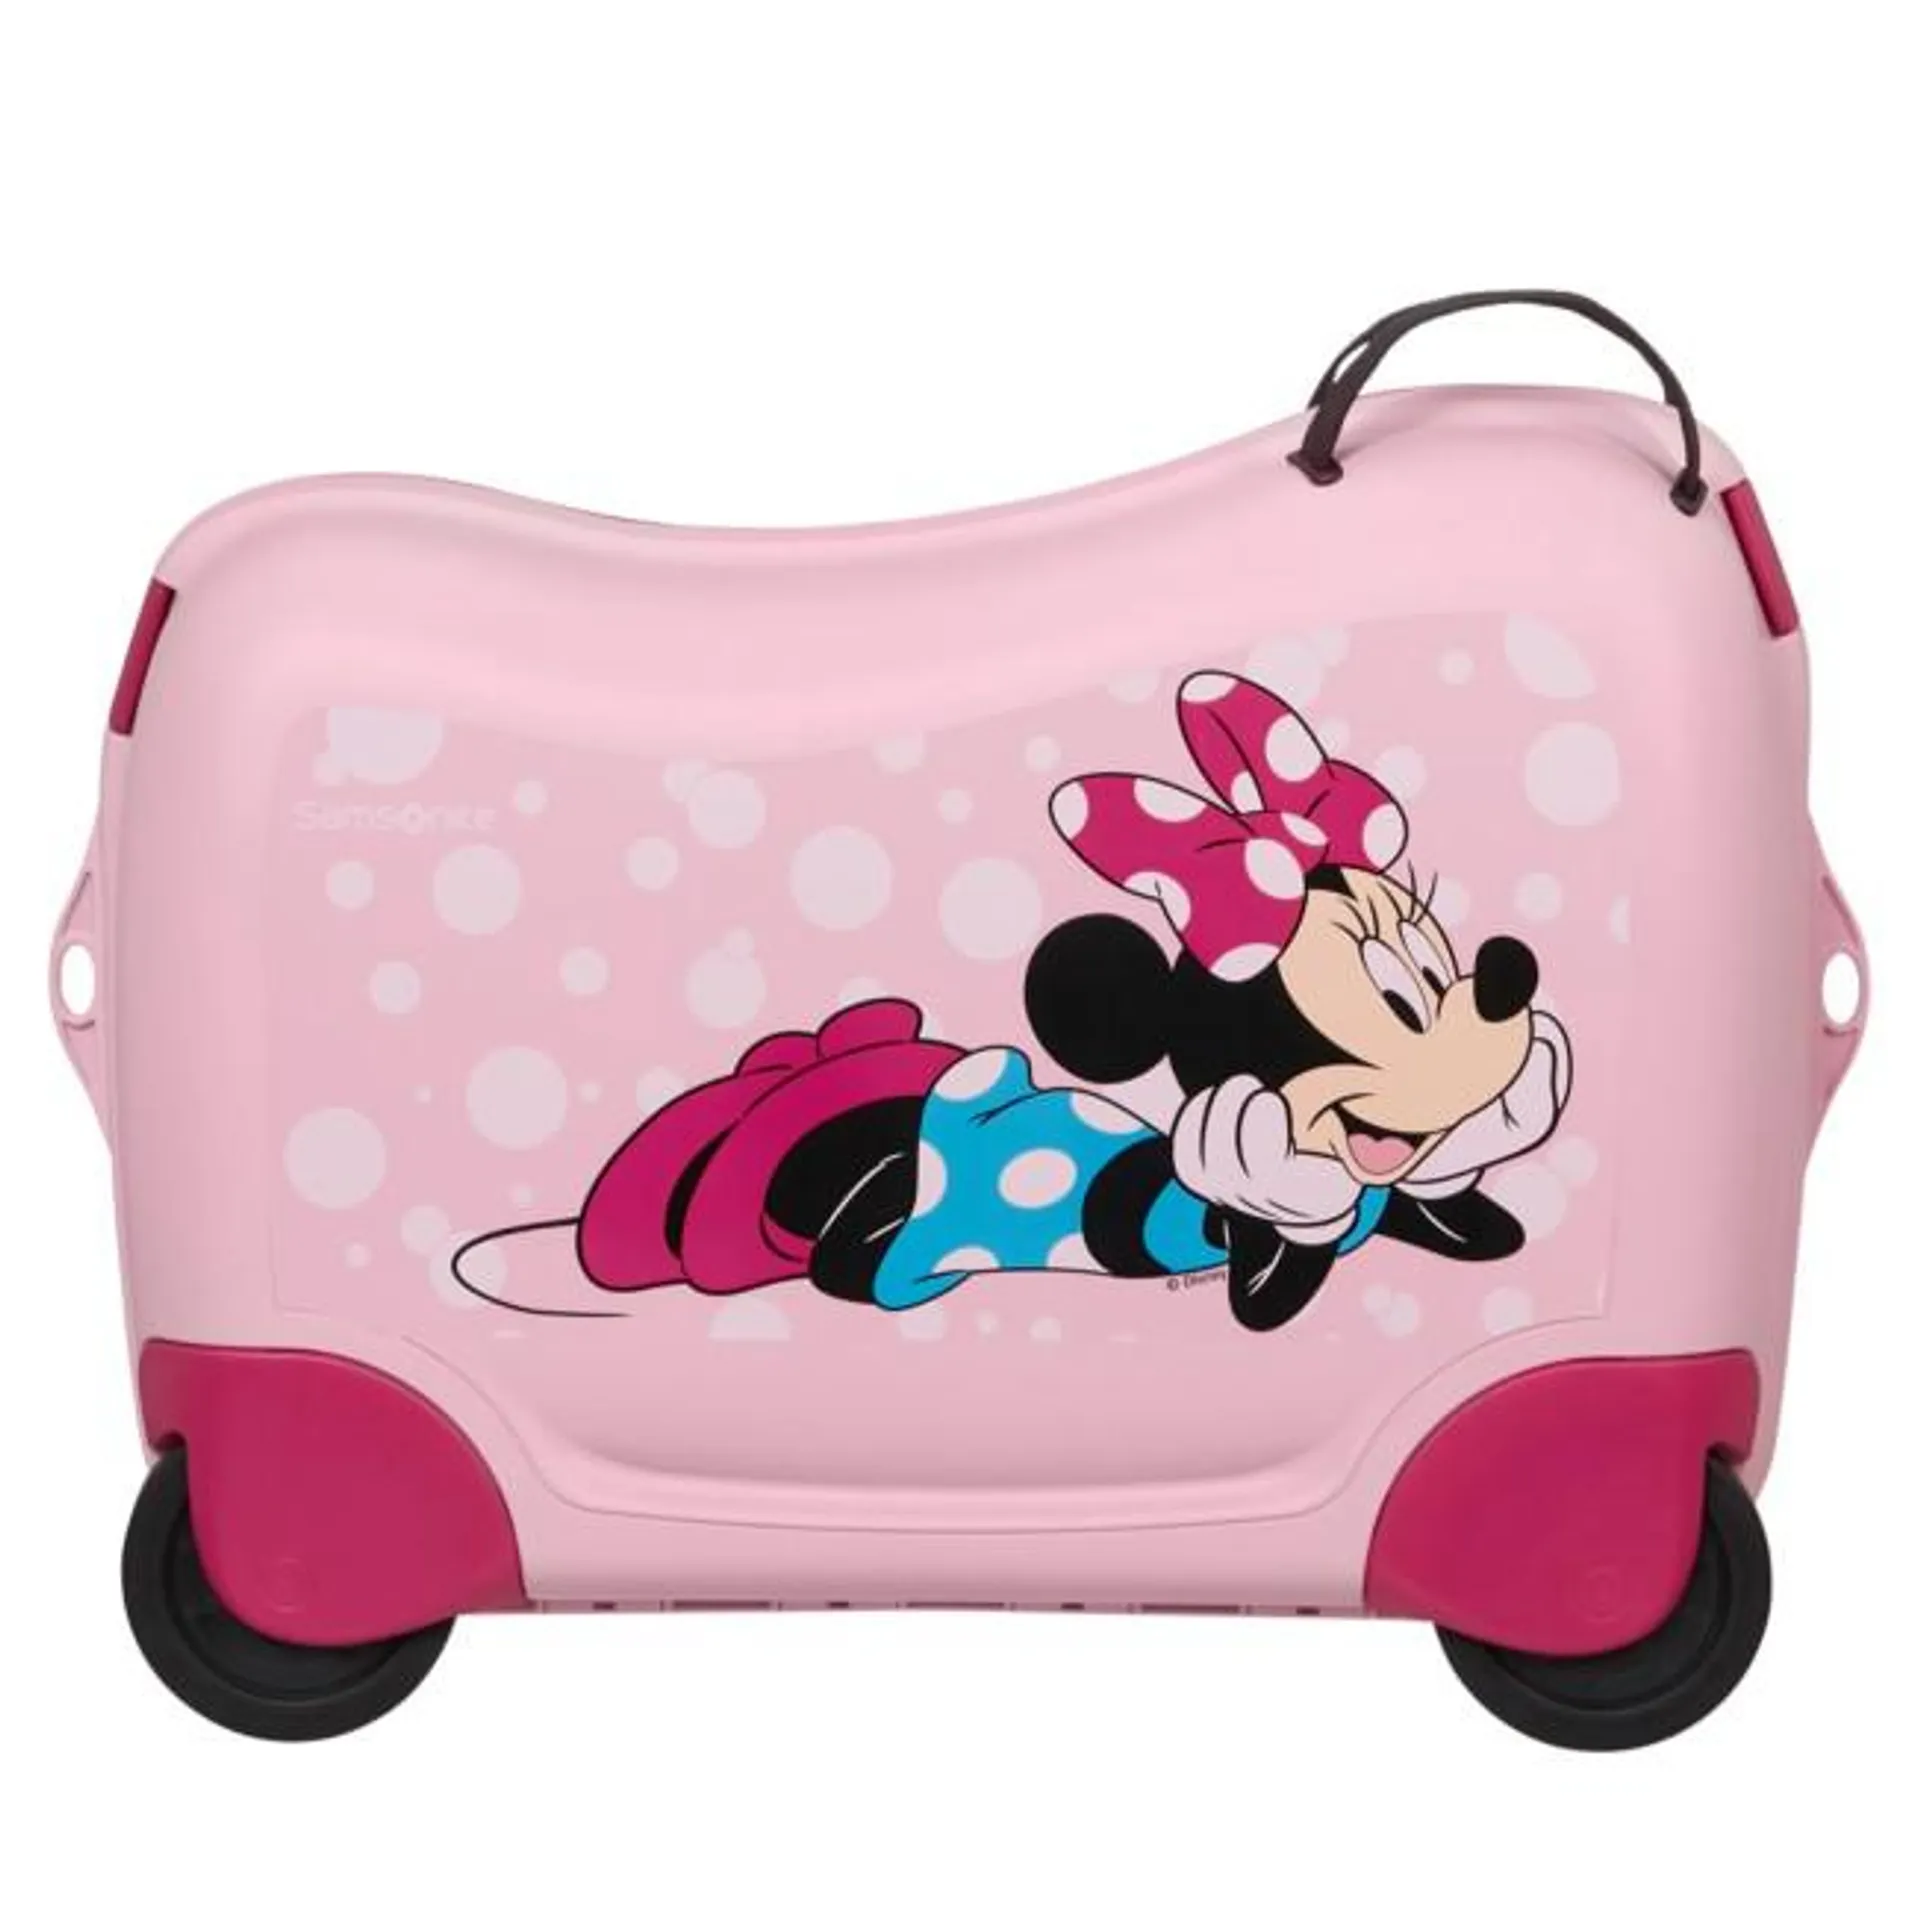 Samsonite Minnie Mouse Dream2Go Rolling Luggage